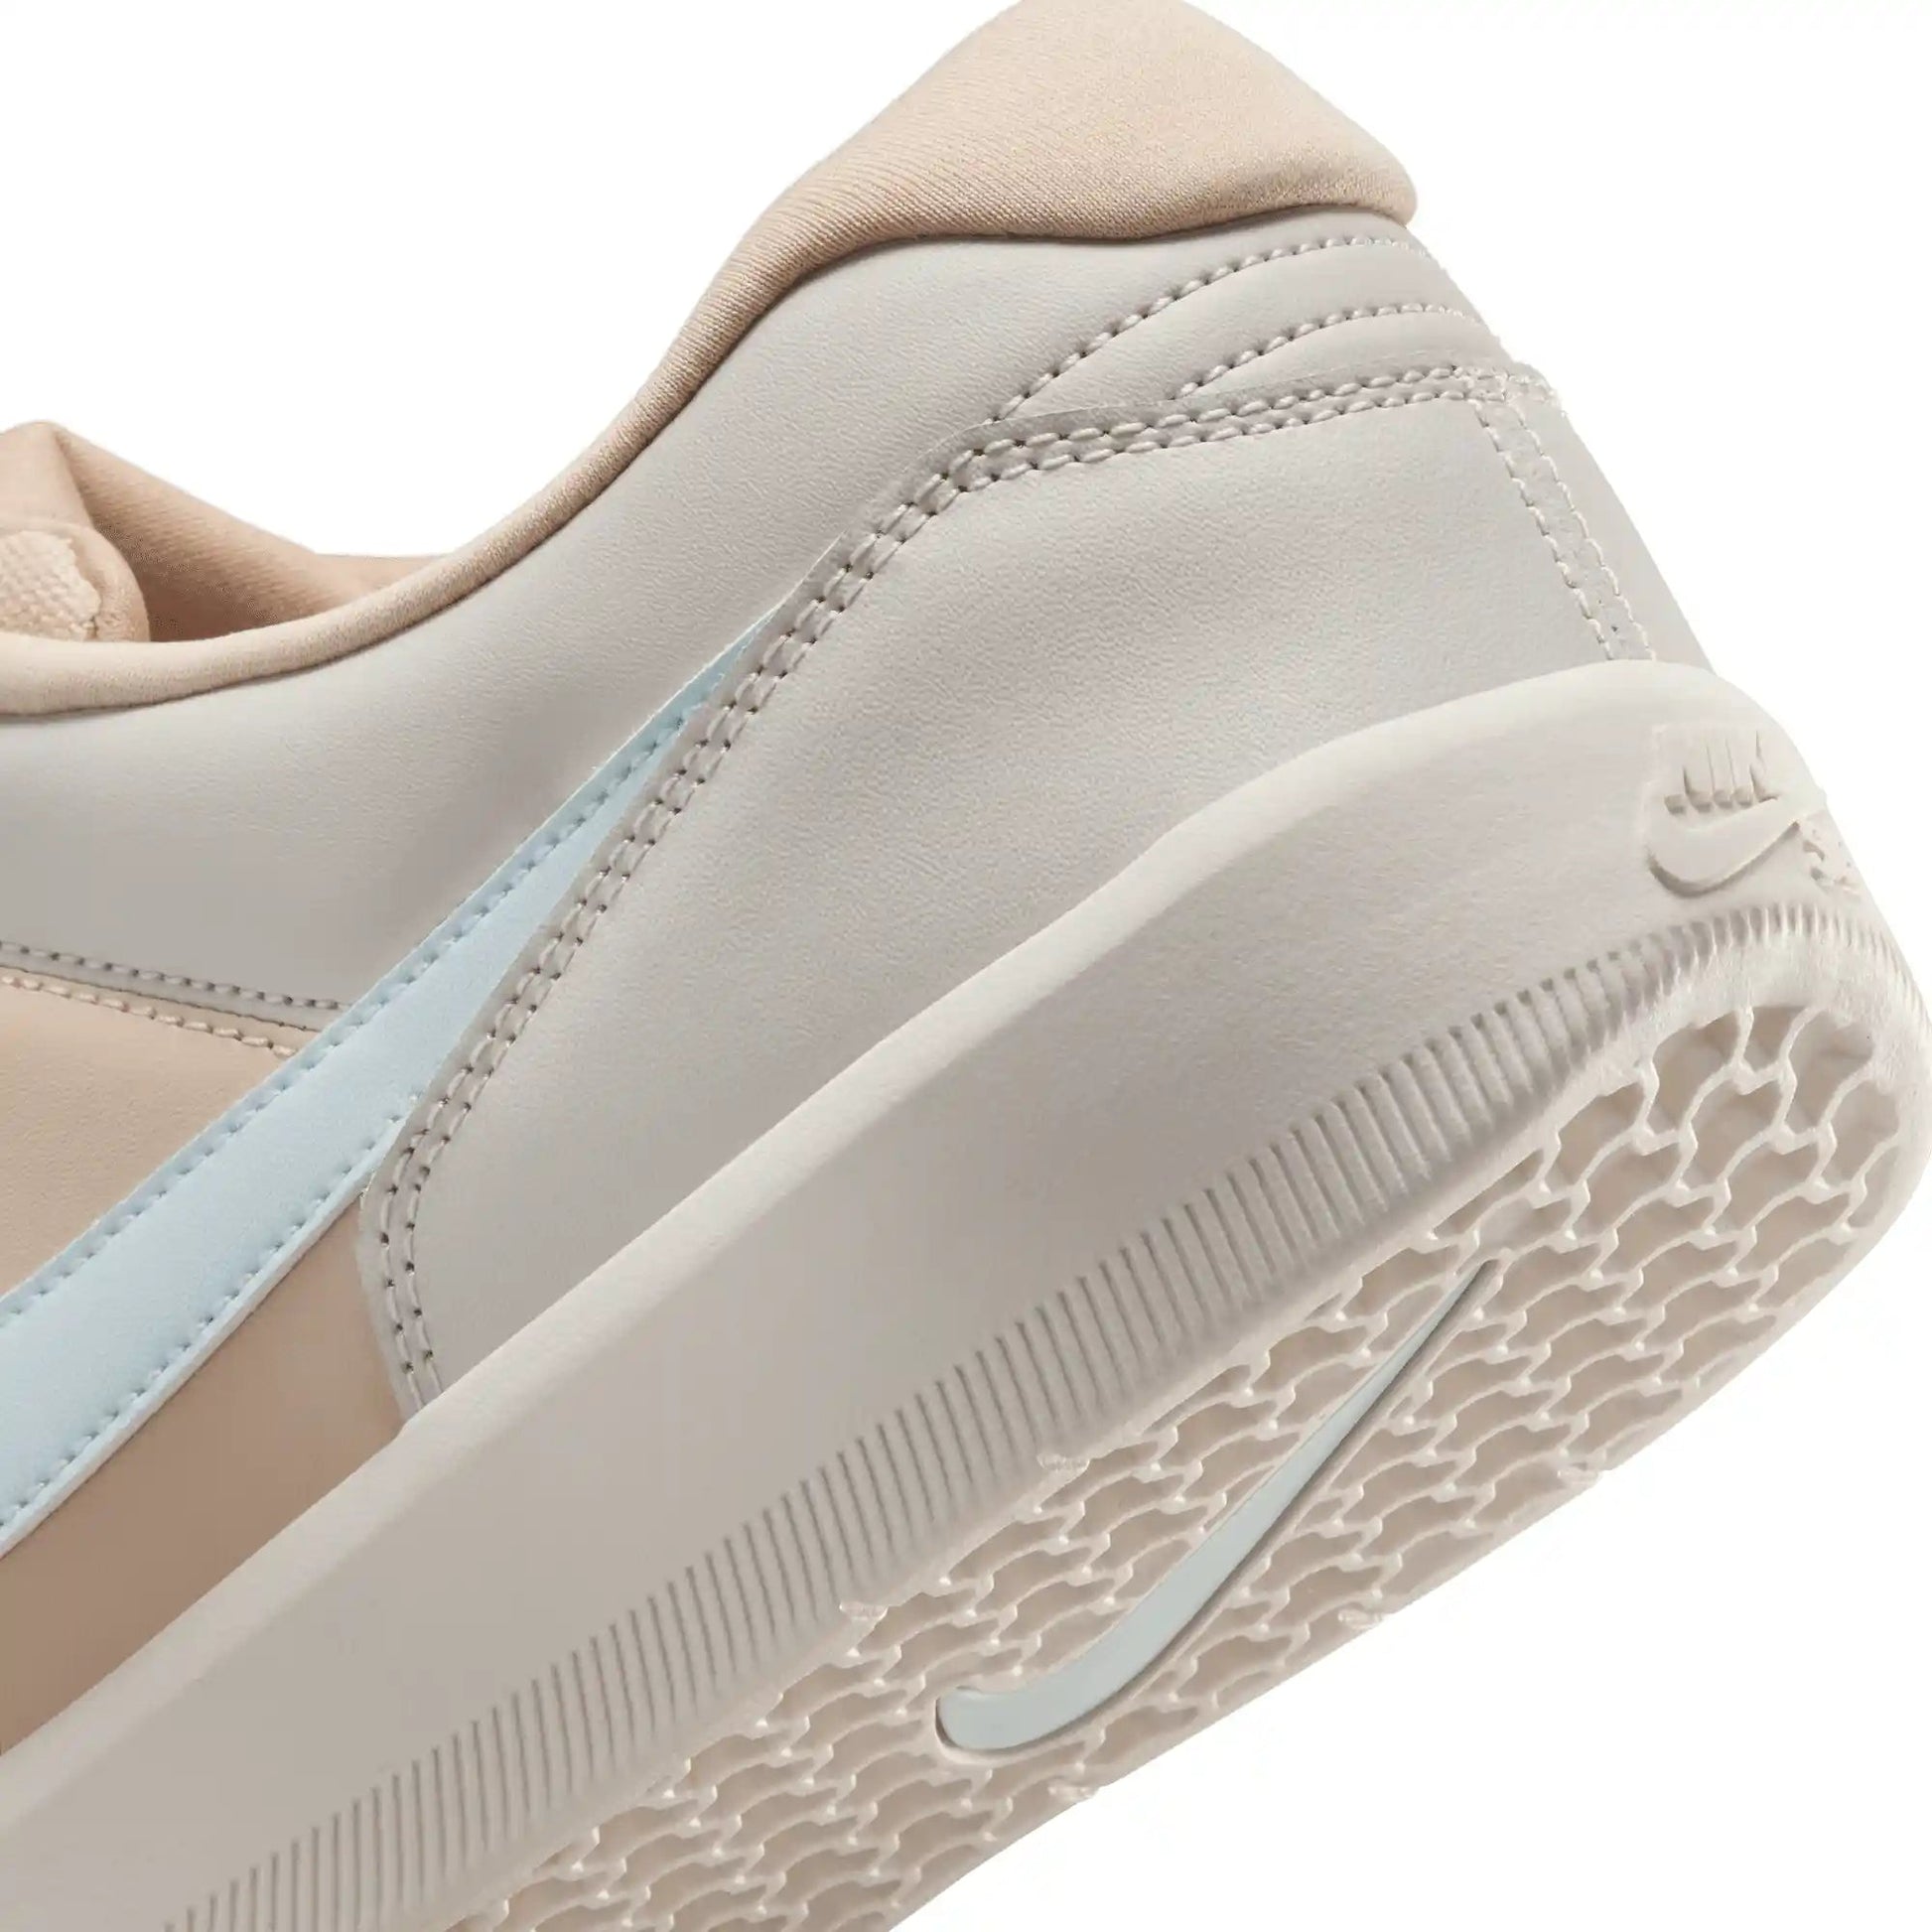 Nike SB Force 58 Premium, light bone/glacier blue-sanddrift-hemp - Tiki Room Skateboards - 11